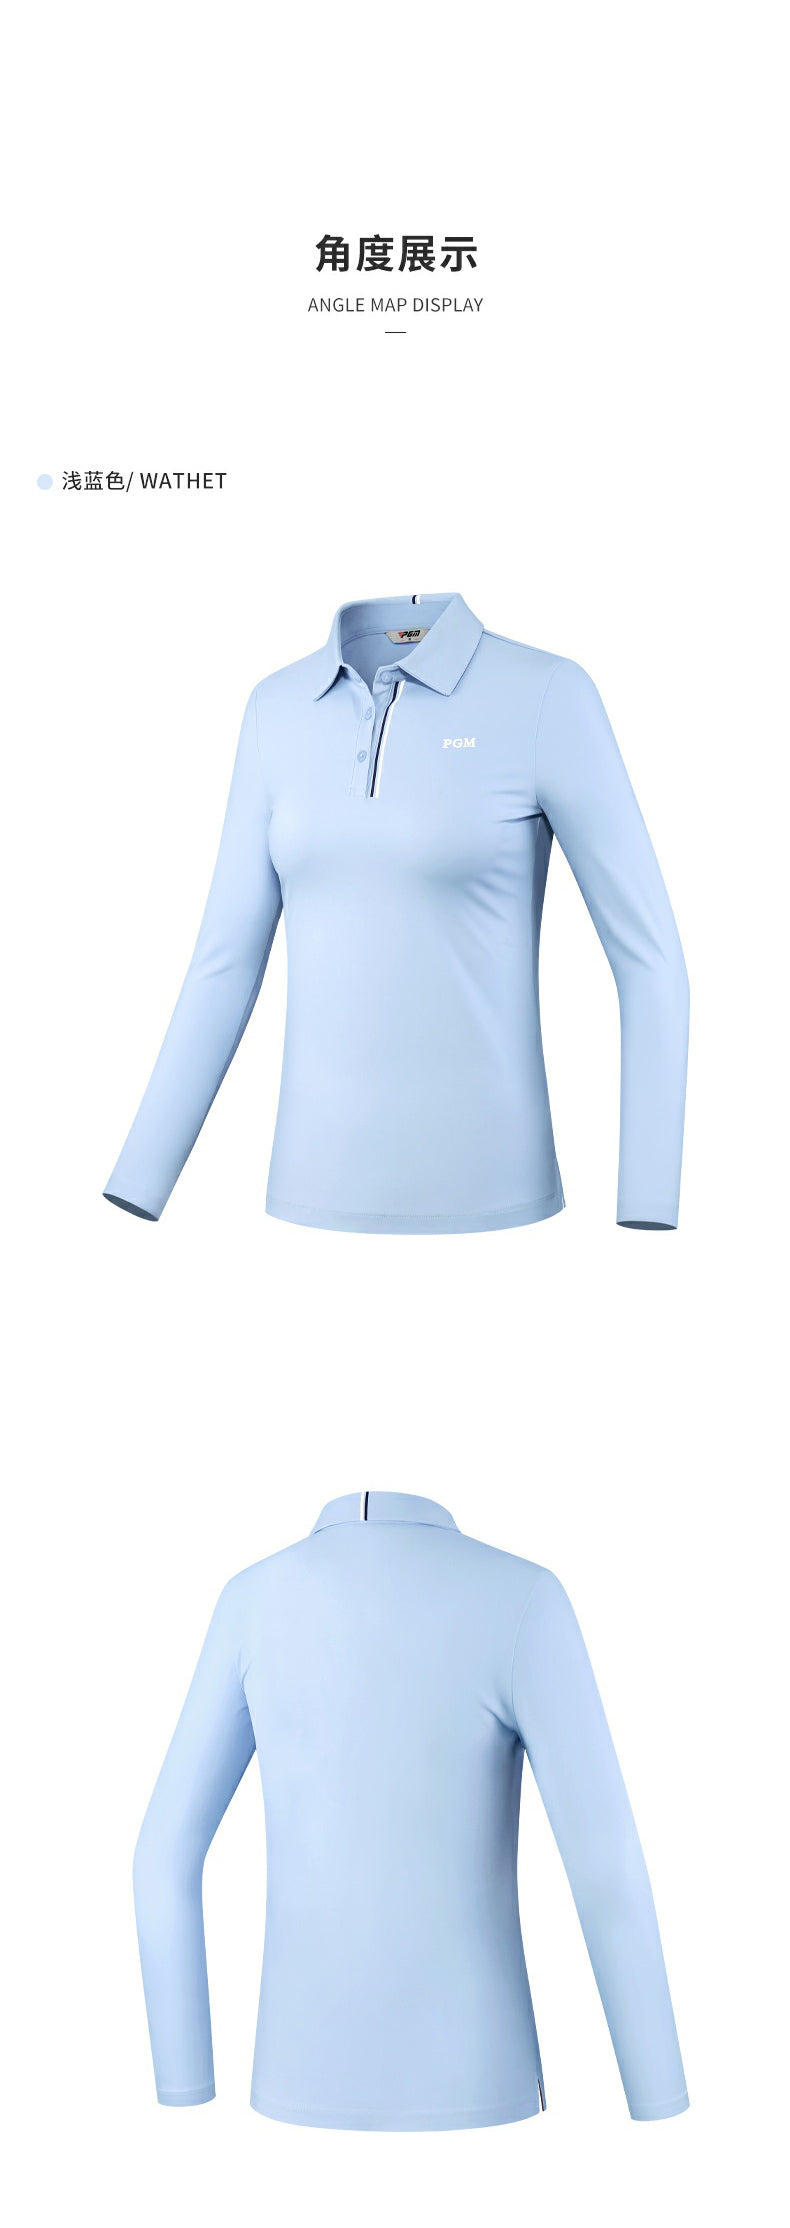 PGM YF534 ladies wholesale custom logo sports golf polo t shirt polyester spandex golf polo